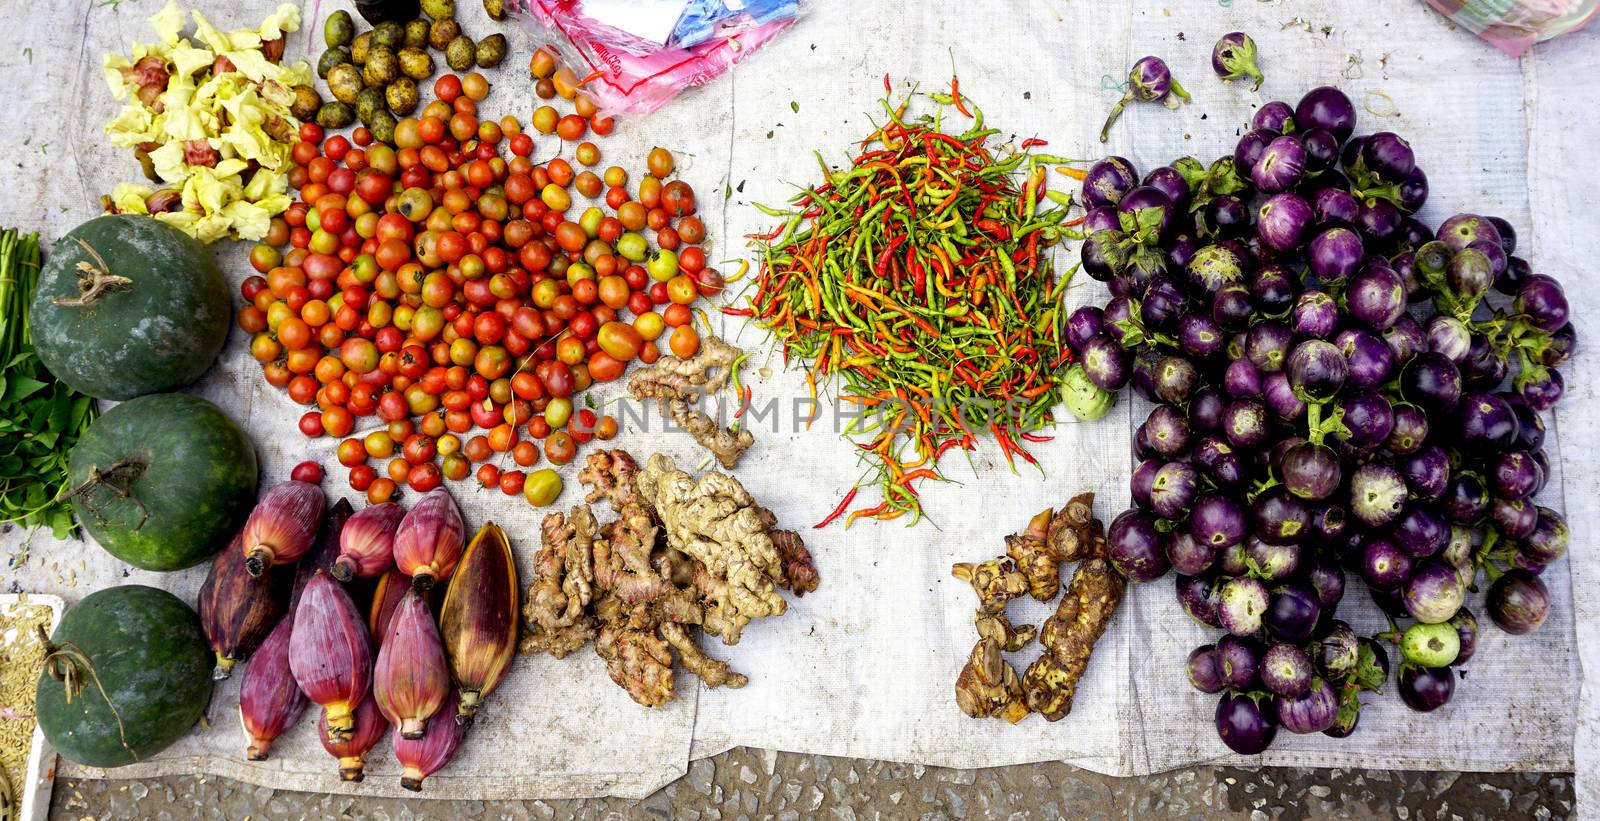 mixed vegetables purple eggplant, chili, ginger, tomato, banana blossom in Farmer market Luang Prabang, Laos